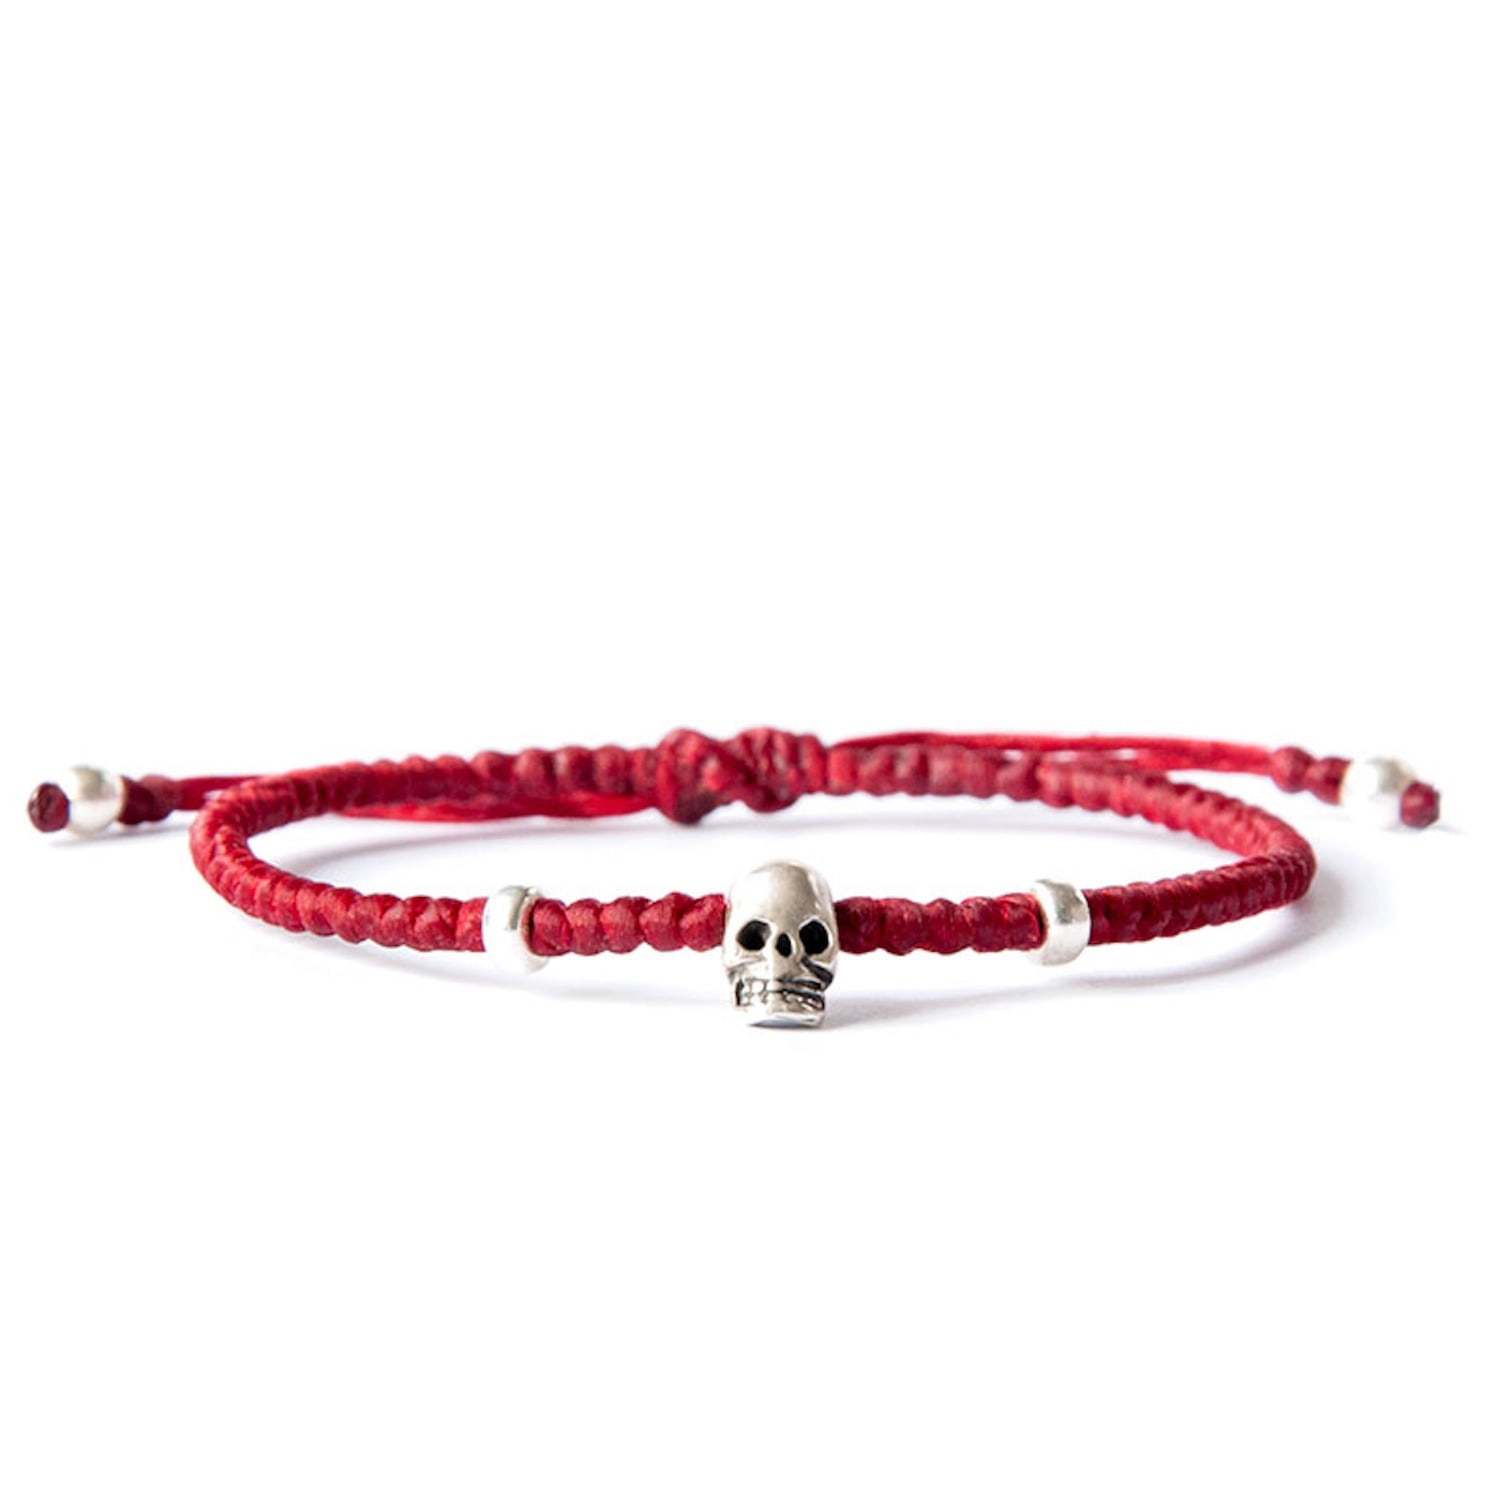 Harbour Uk Bracelets Women's Red String Bracelet With Sterling Silver Skull Charm - Red